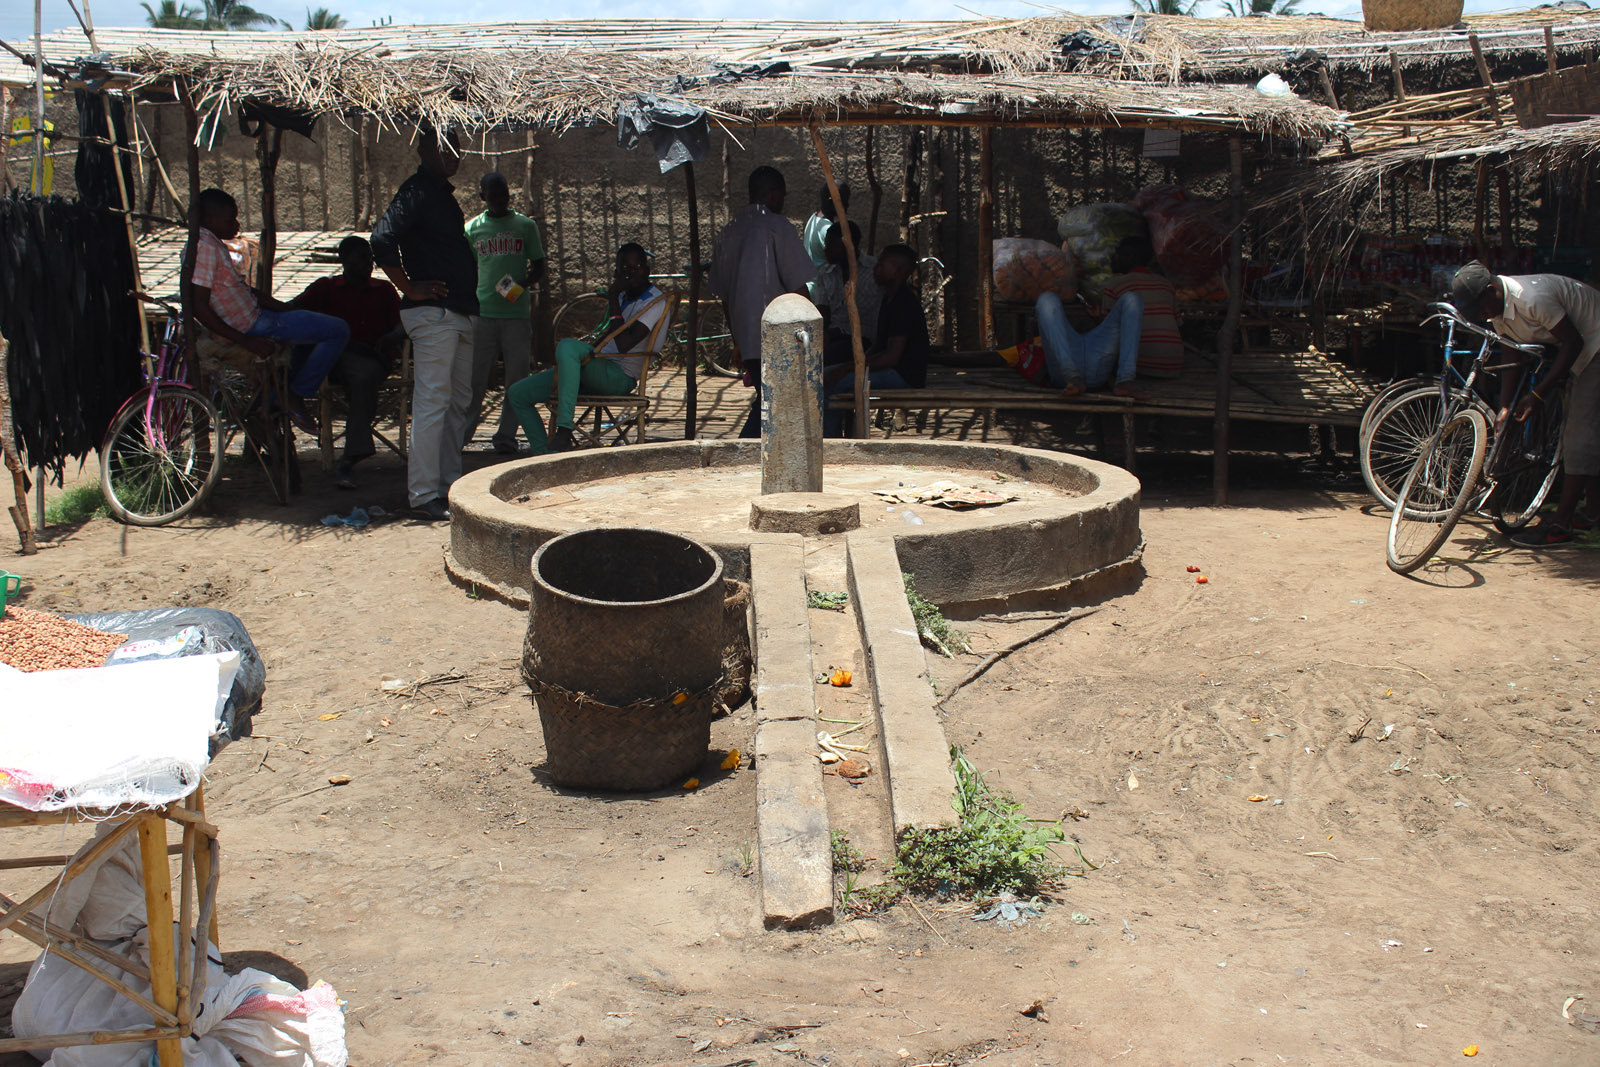 Village wells often supply contaminated water. 